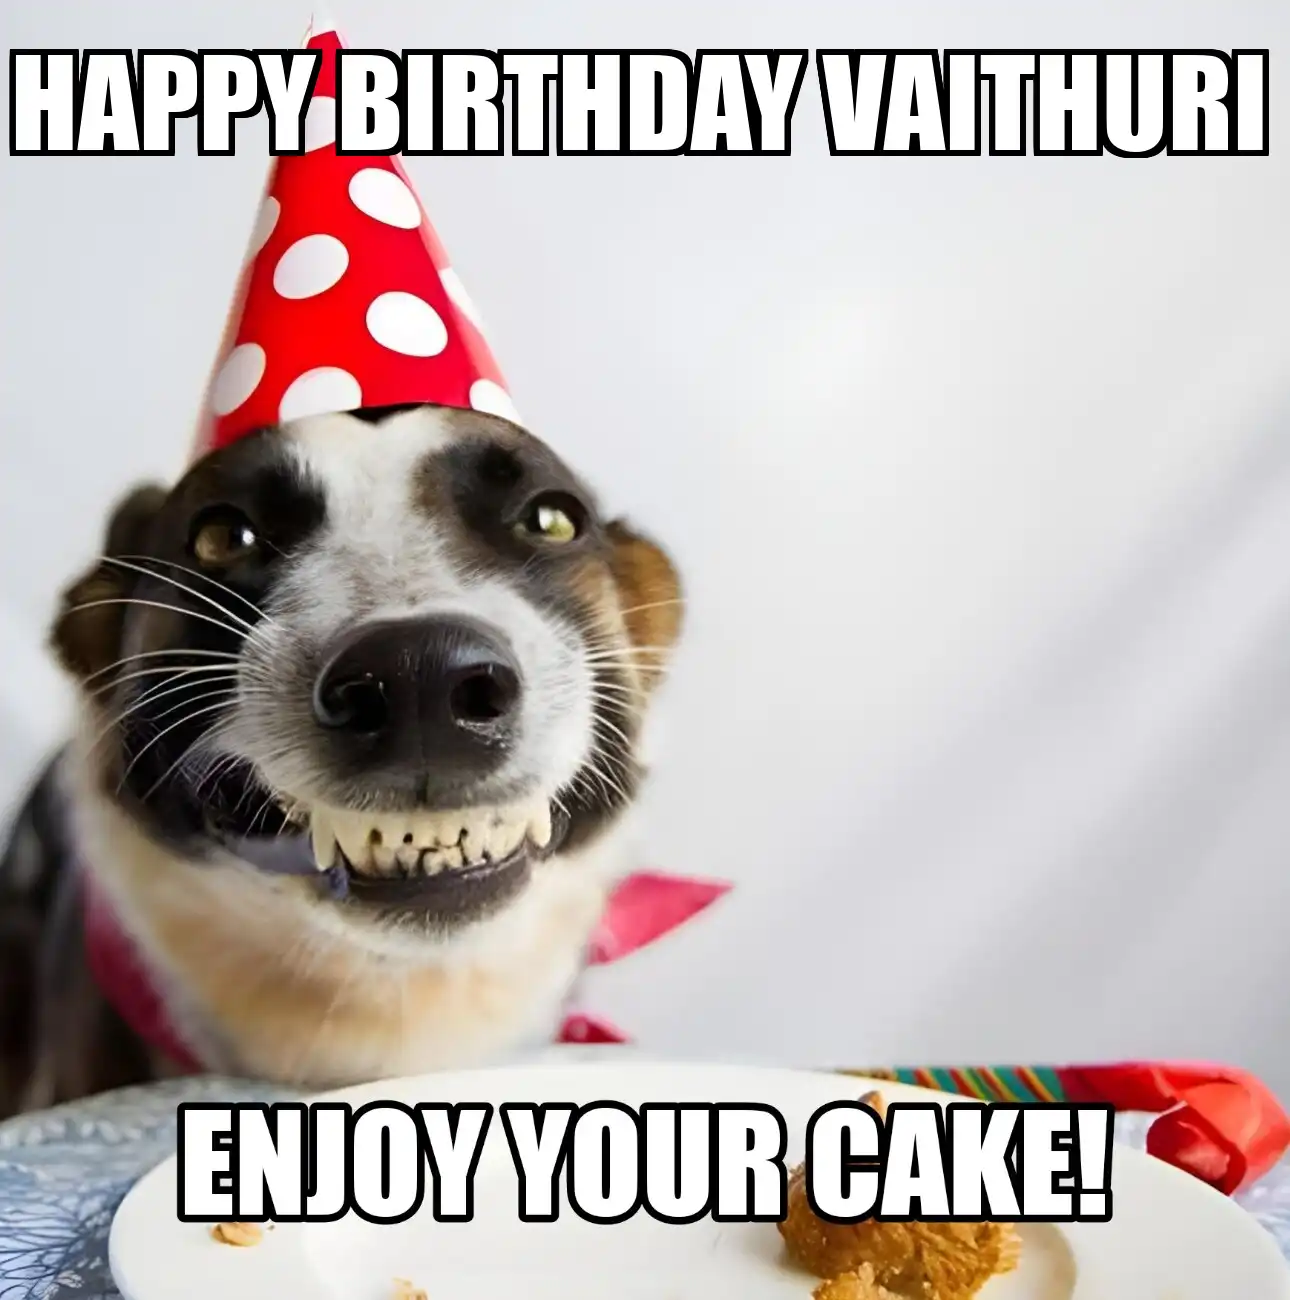 Happy Birthday Vaithuri Enjoy Your Cake Dog Meme